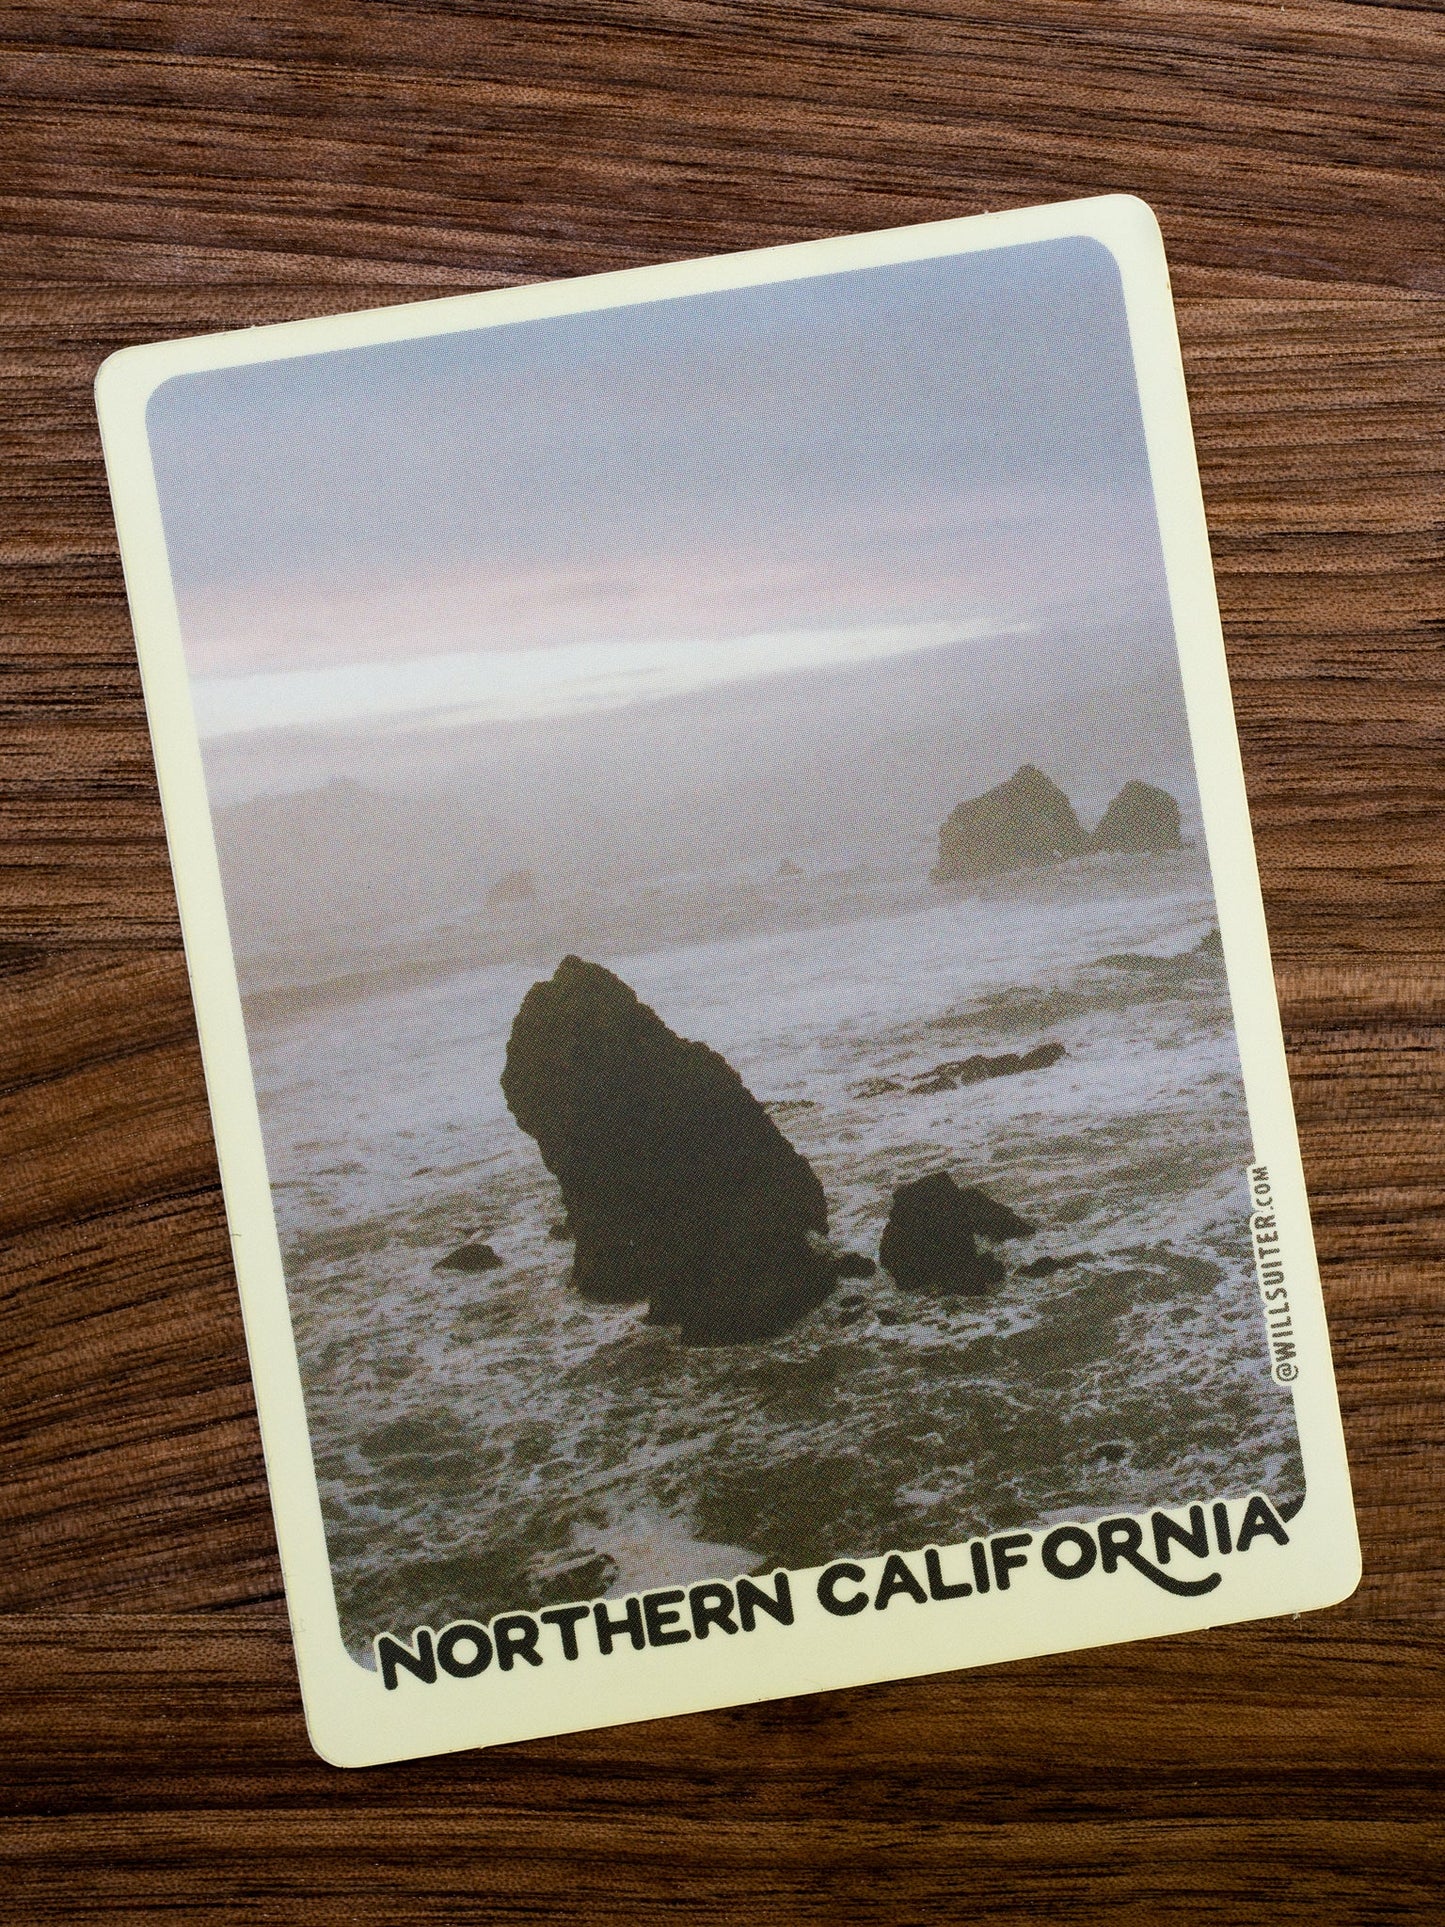 Sea Stacks - Northern California 3x4 Inch Sticker